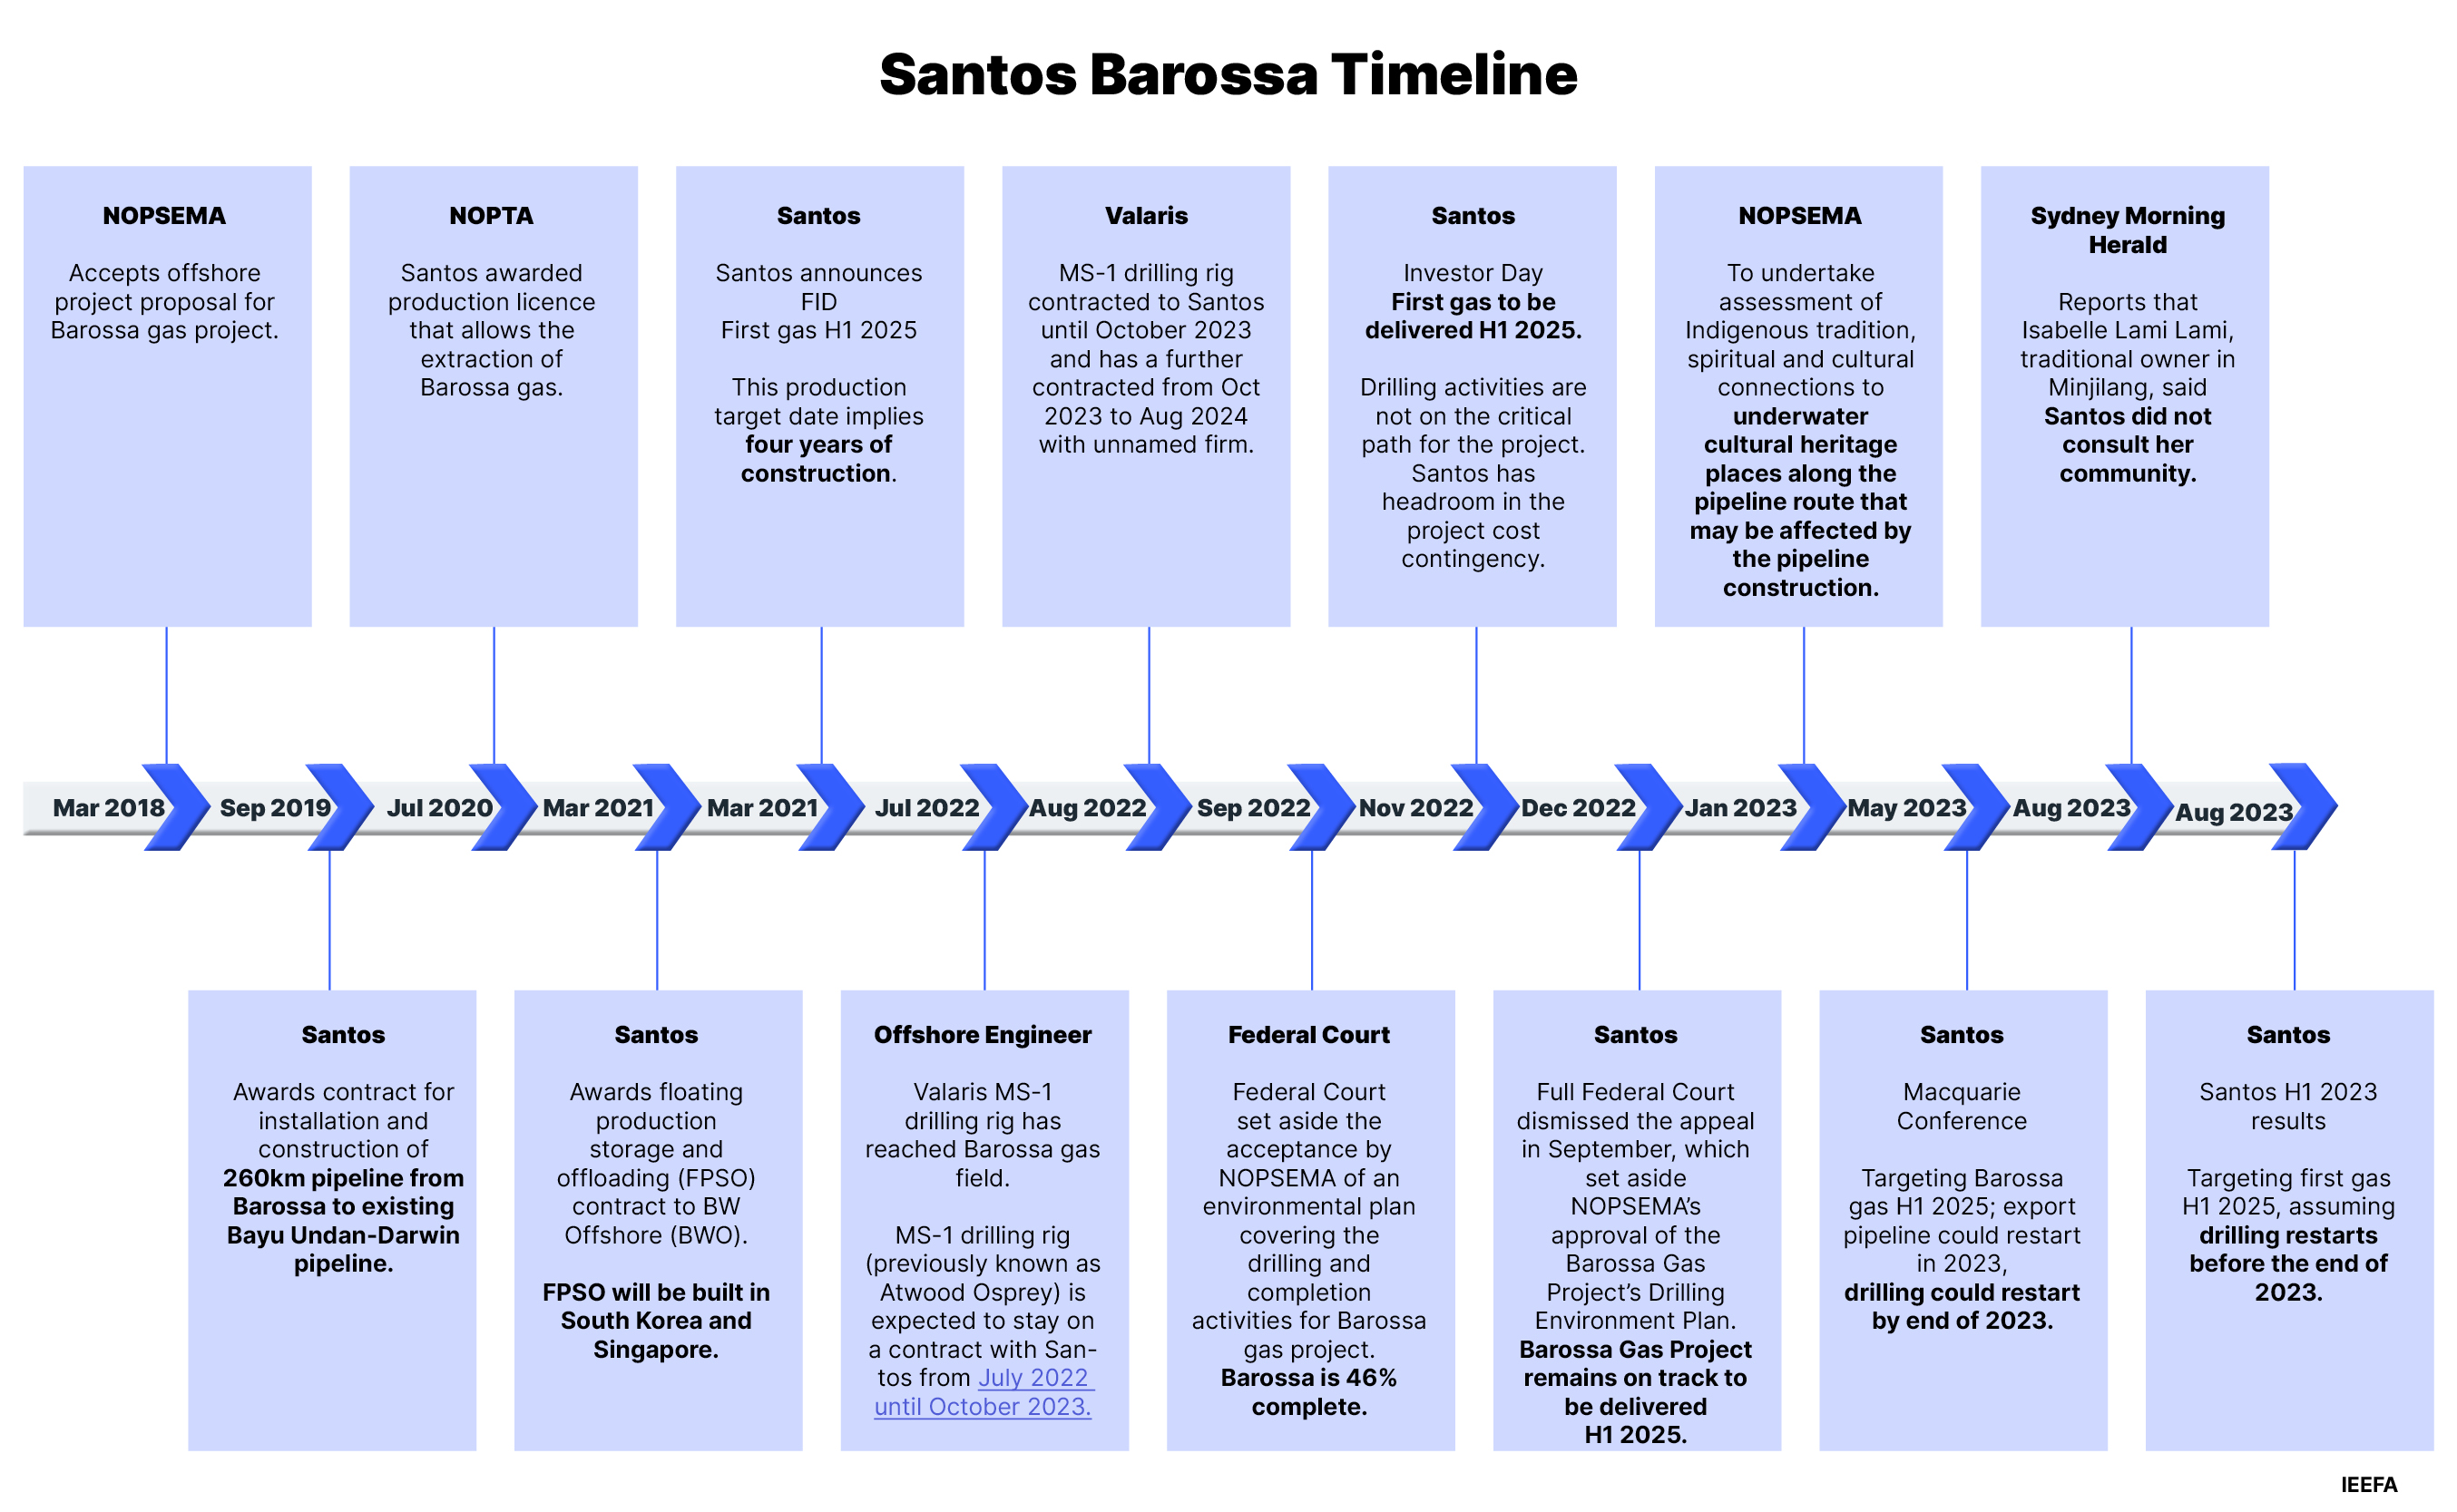 Barossa Santos Timeline of events